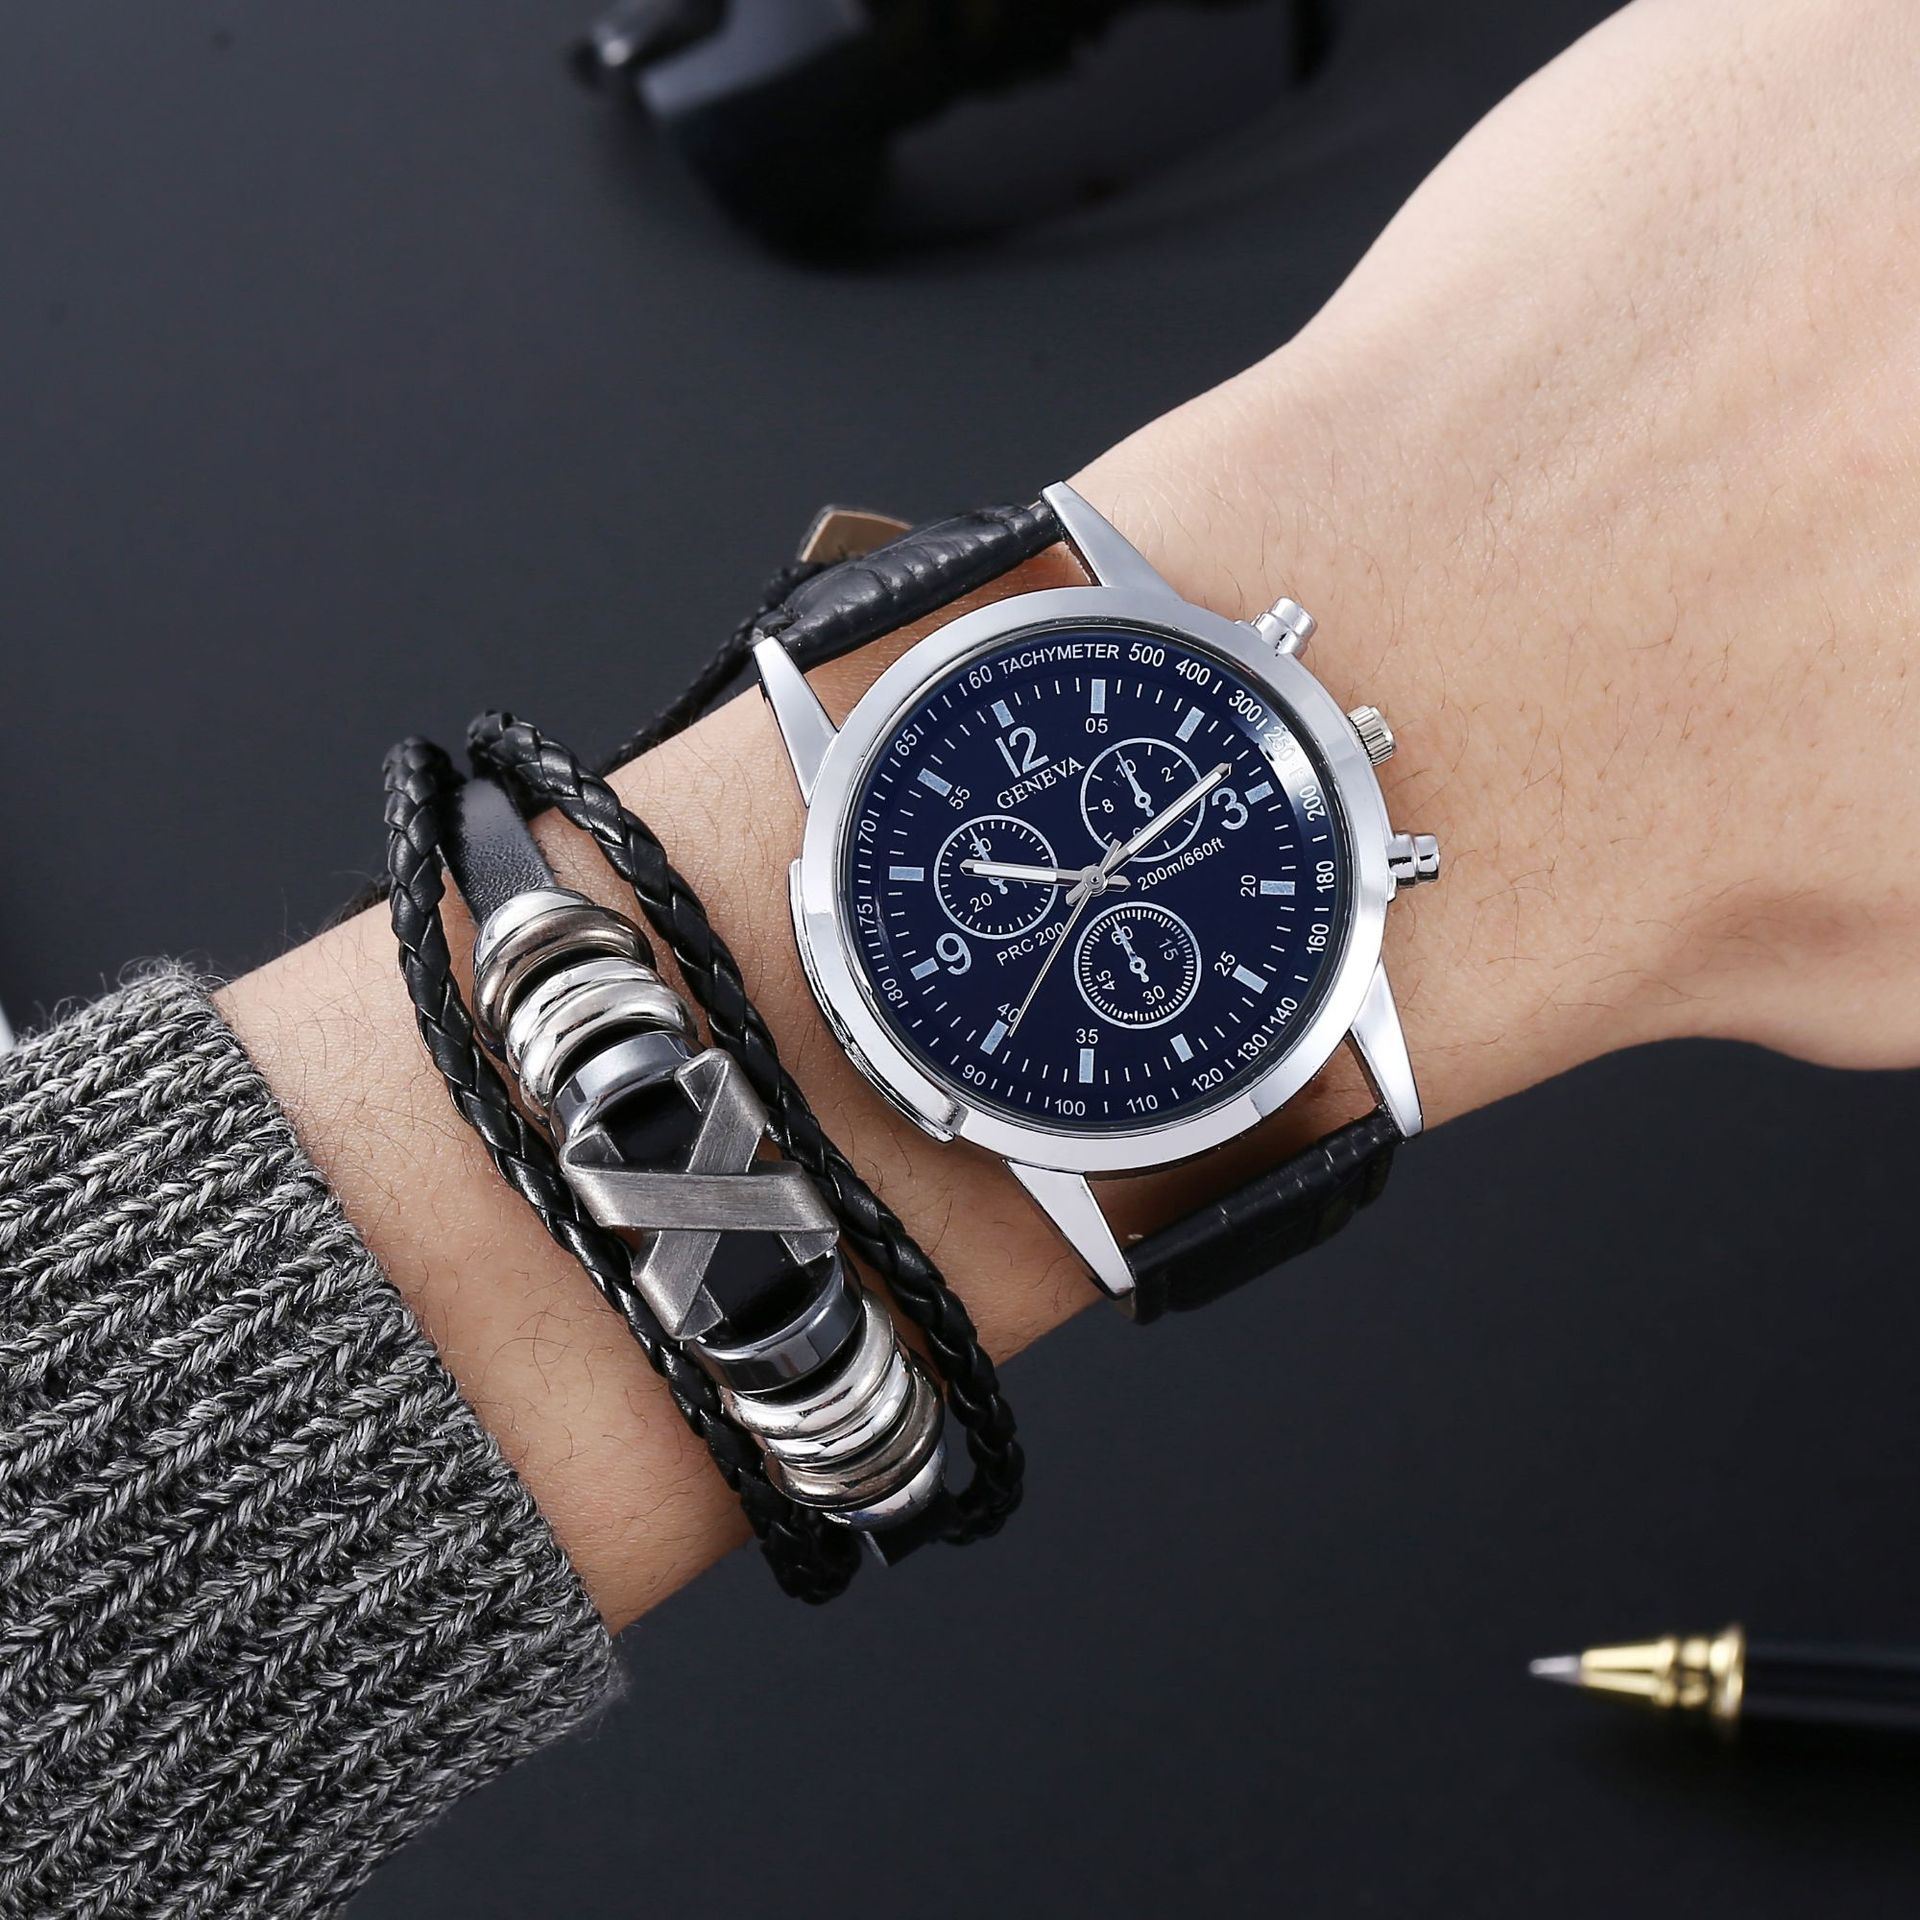 1:A watch and bracelet